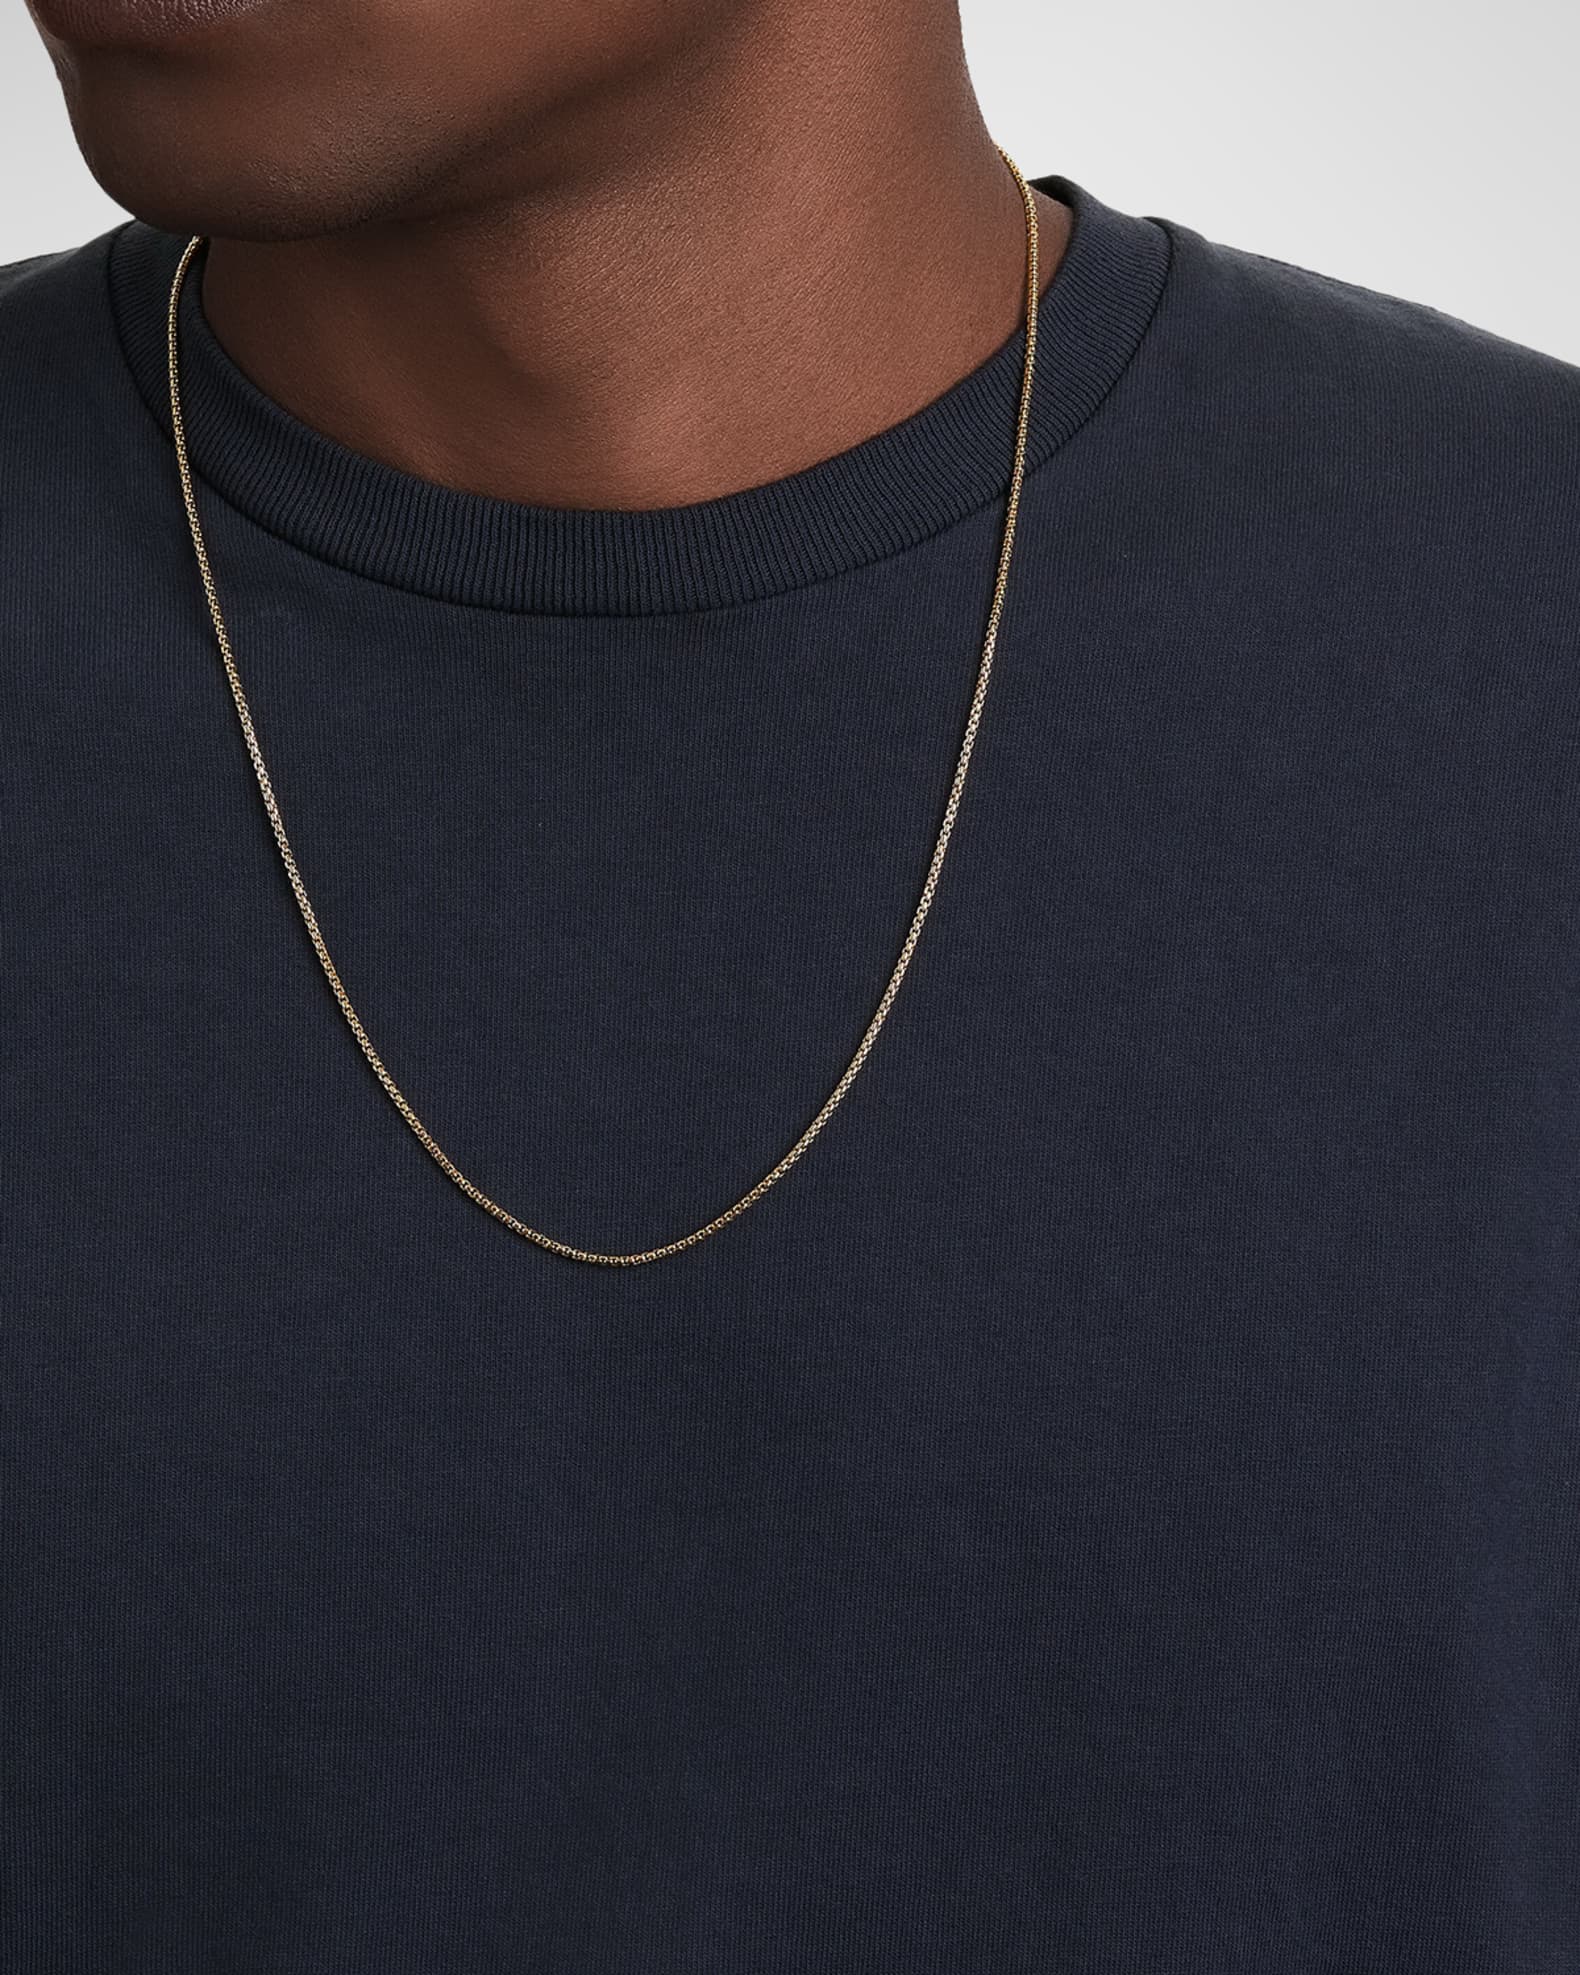 David Yurman Men's Box Chain Necklace in 18K Gold, 1.7mm, 22